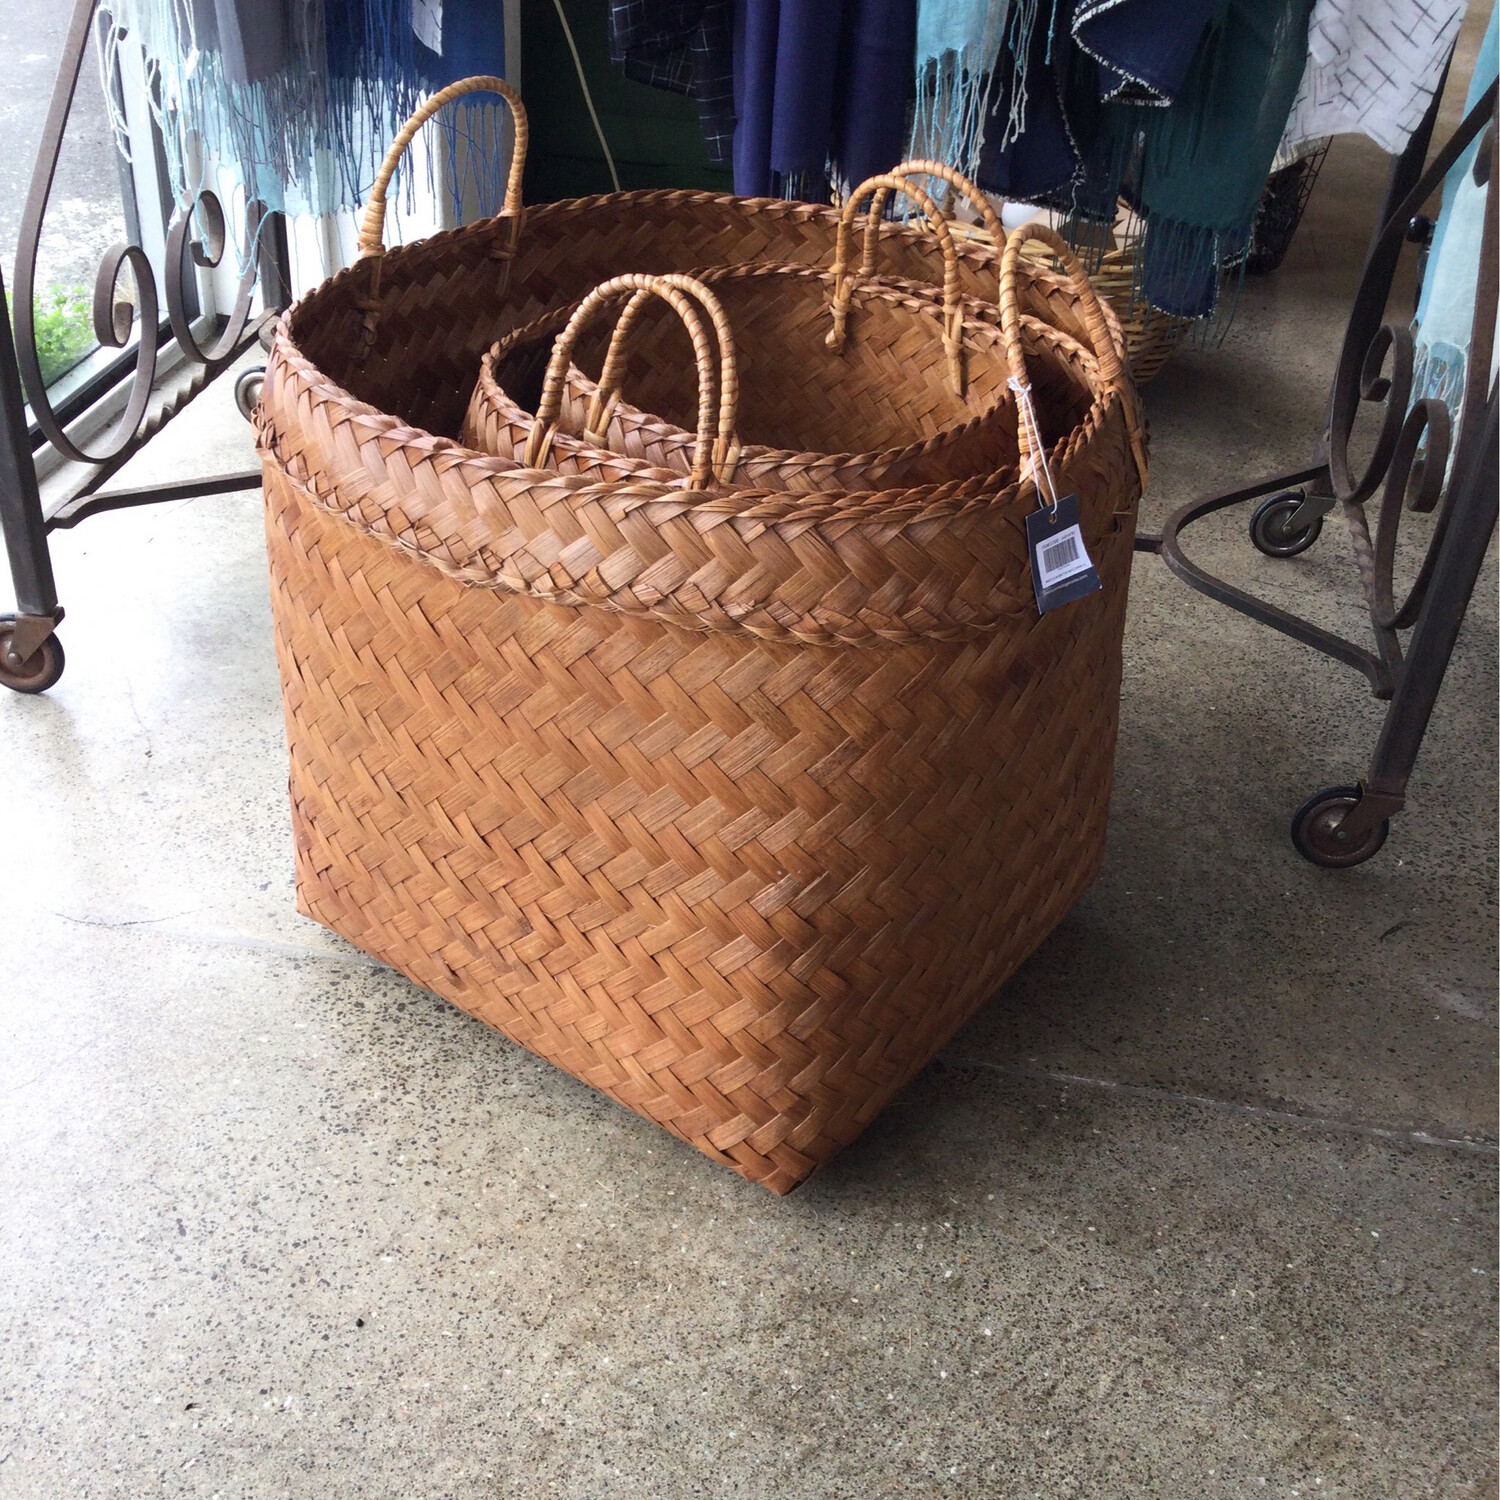 Raffles Basket , Woven Plant Holder Or Storage . 3 Sizes to Choose